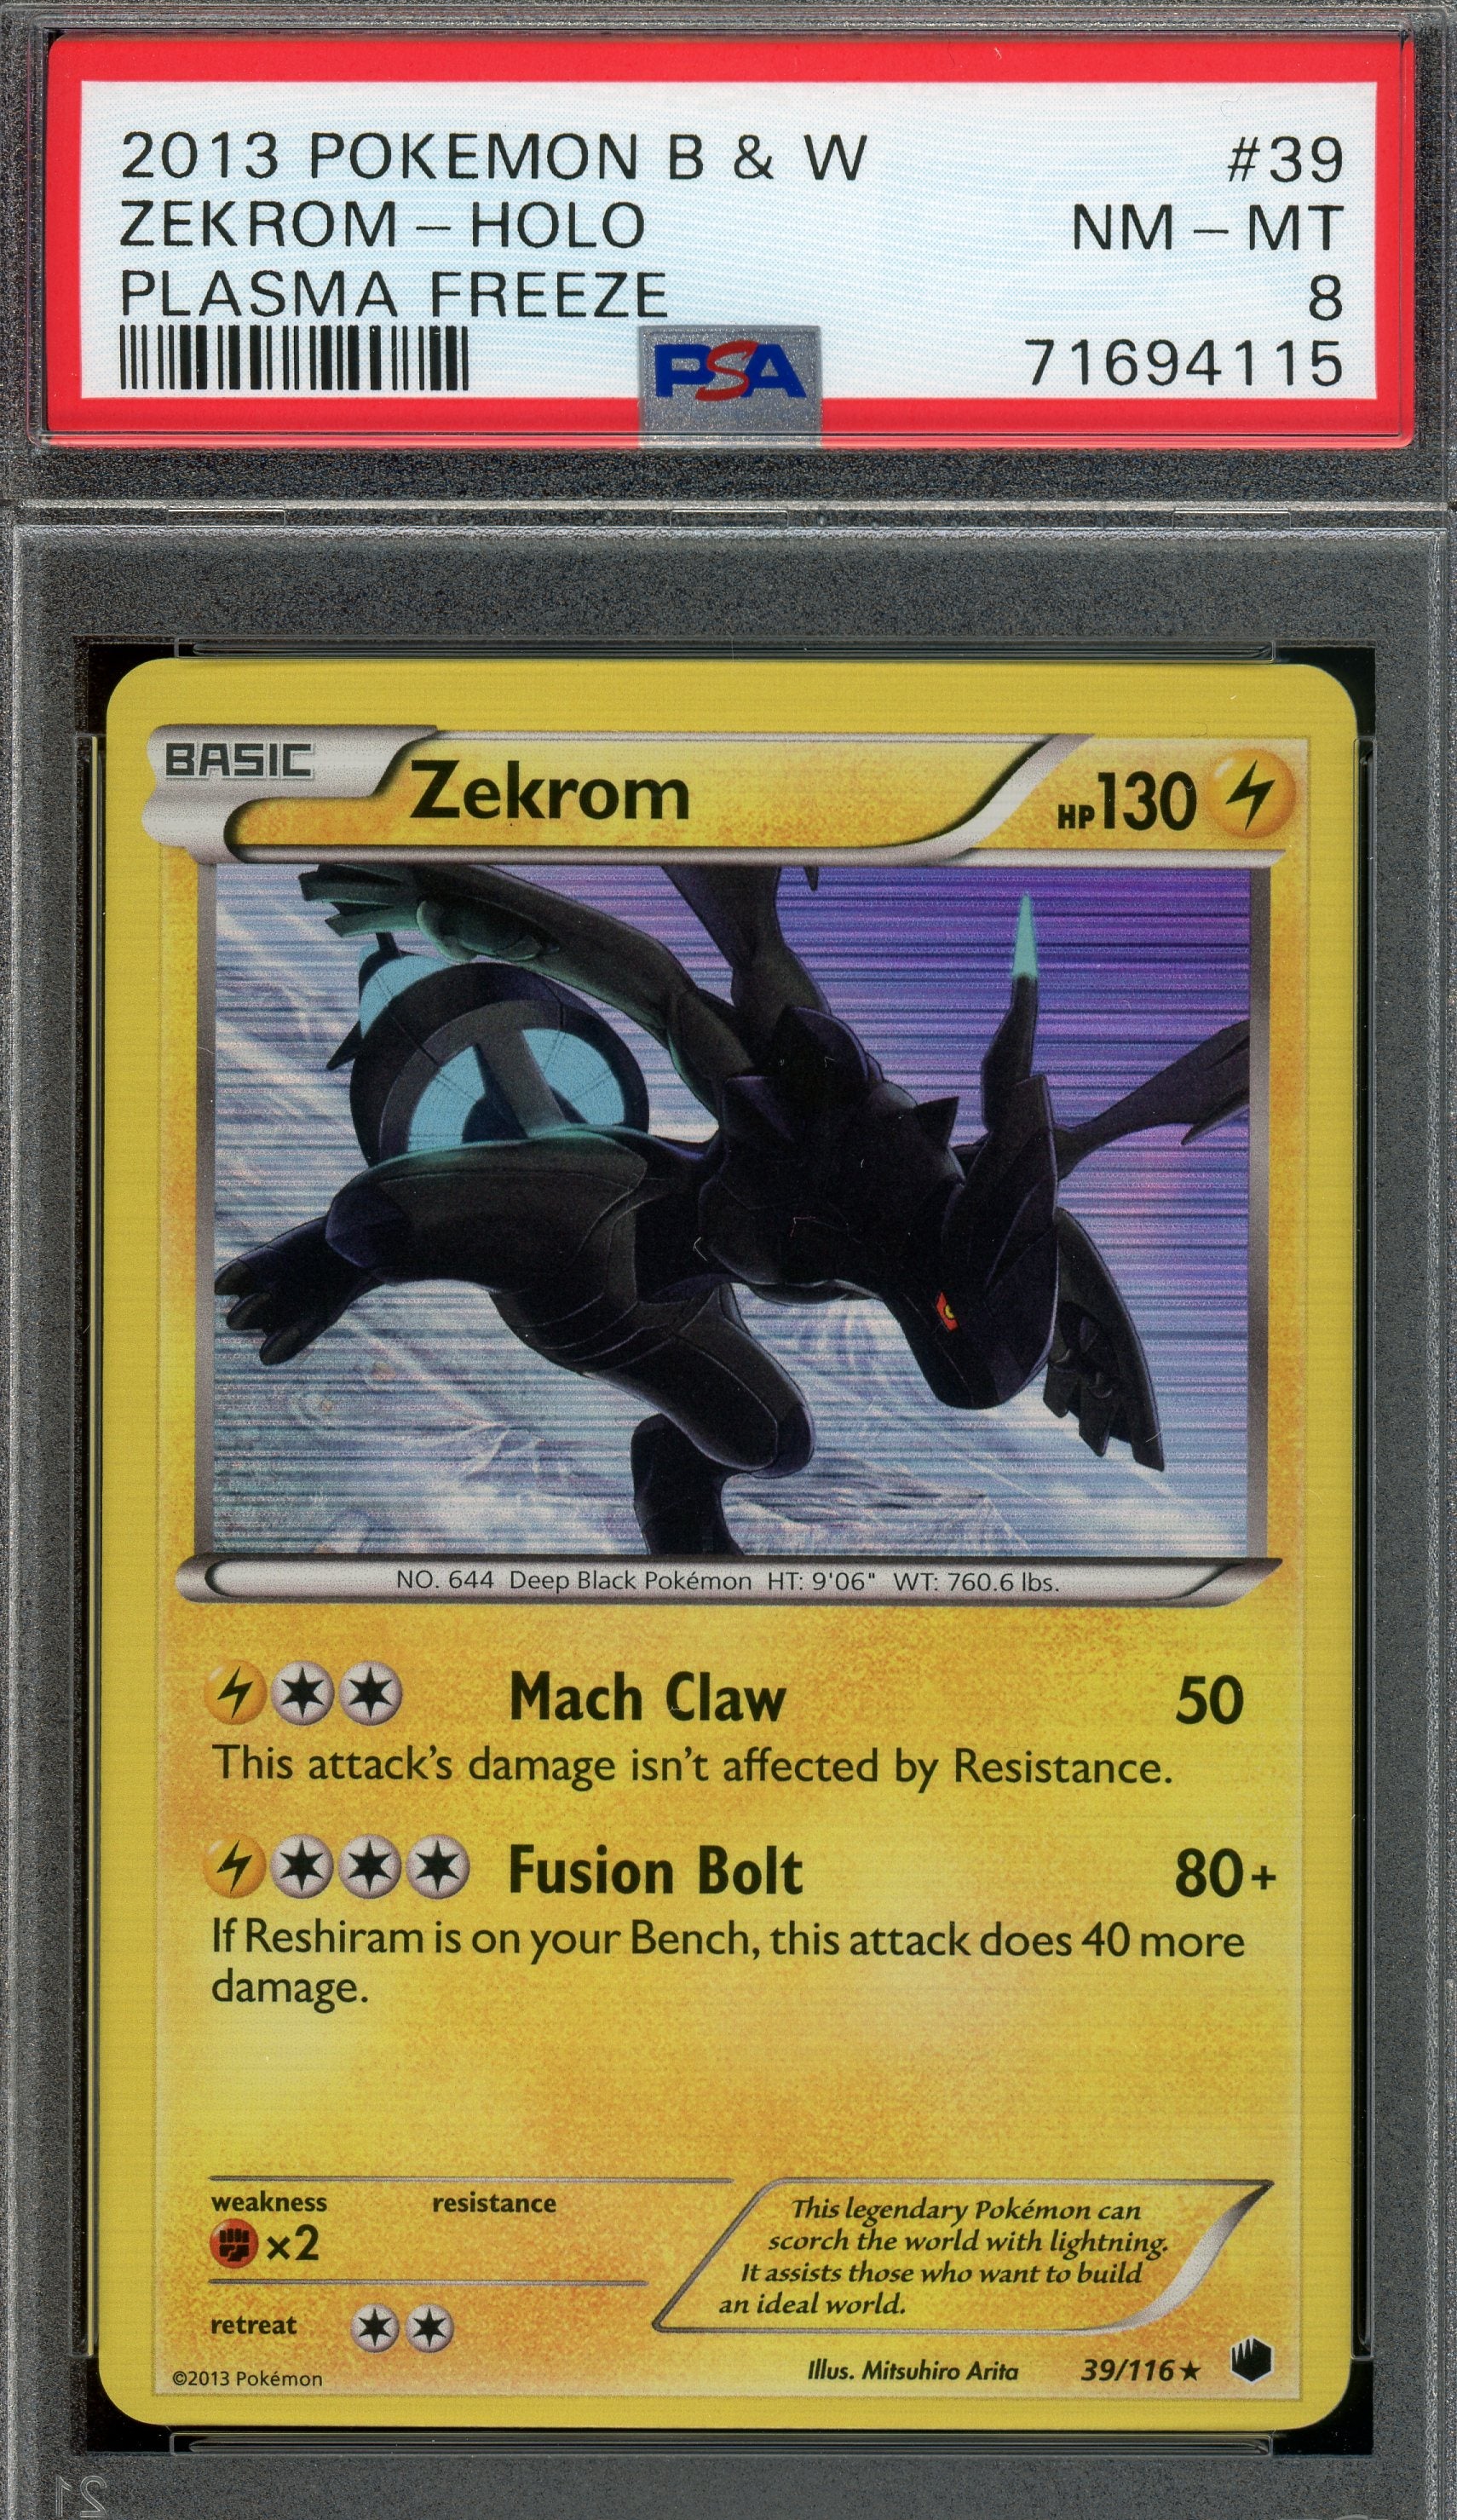 Over the Brick – Pokémon - Zekrom Holo, Plasma Freeze #39 PSA 8